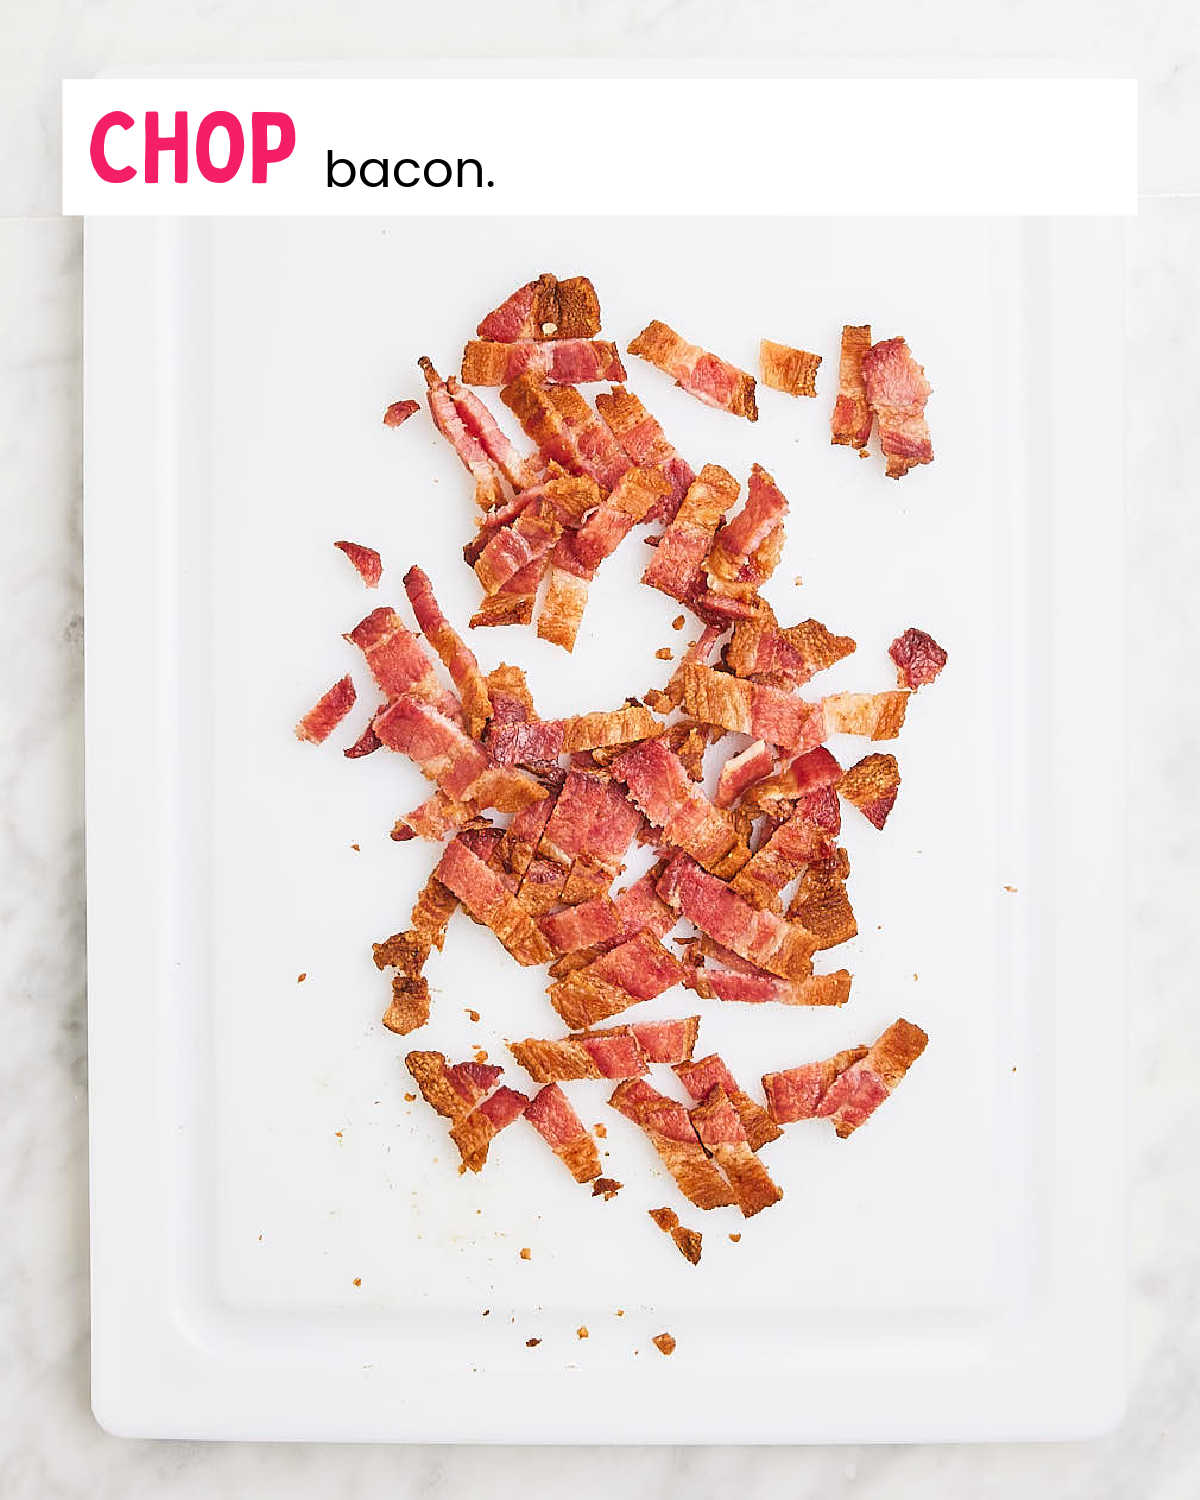 Process Step: Chop bacon.